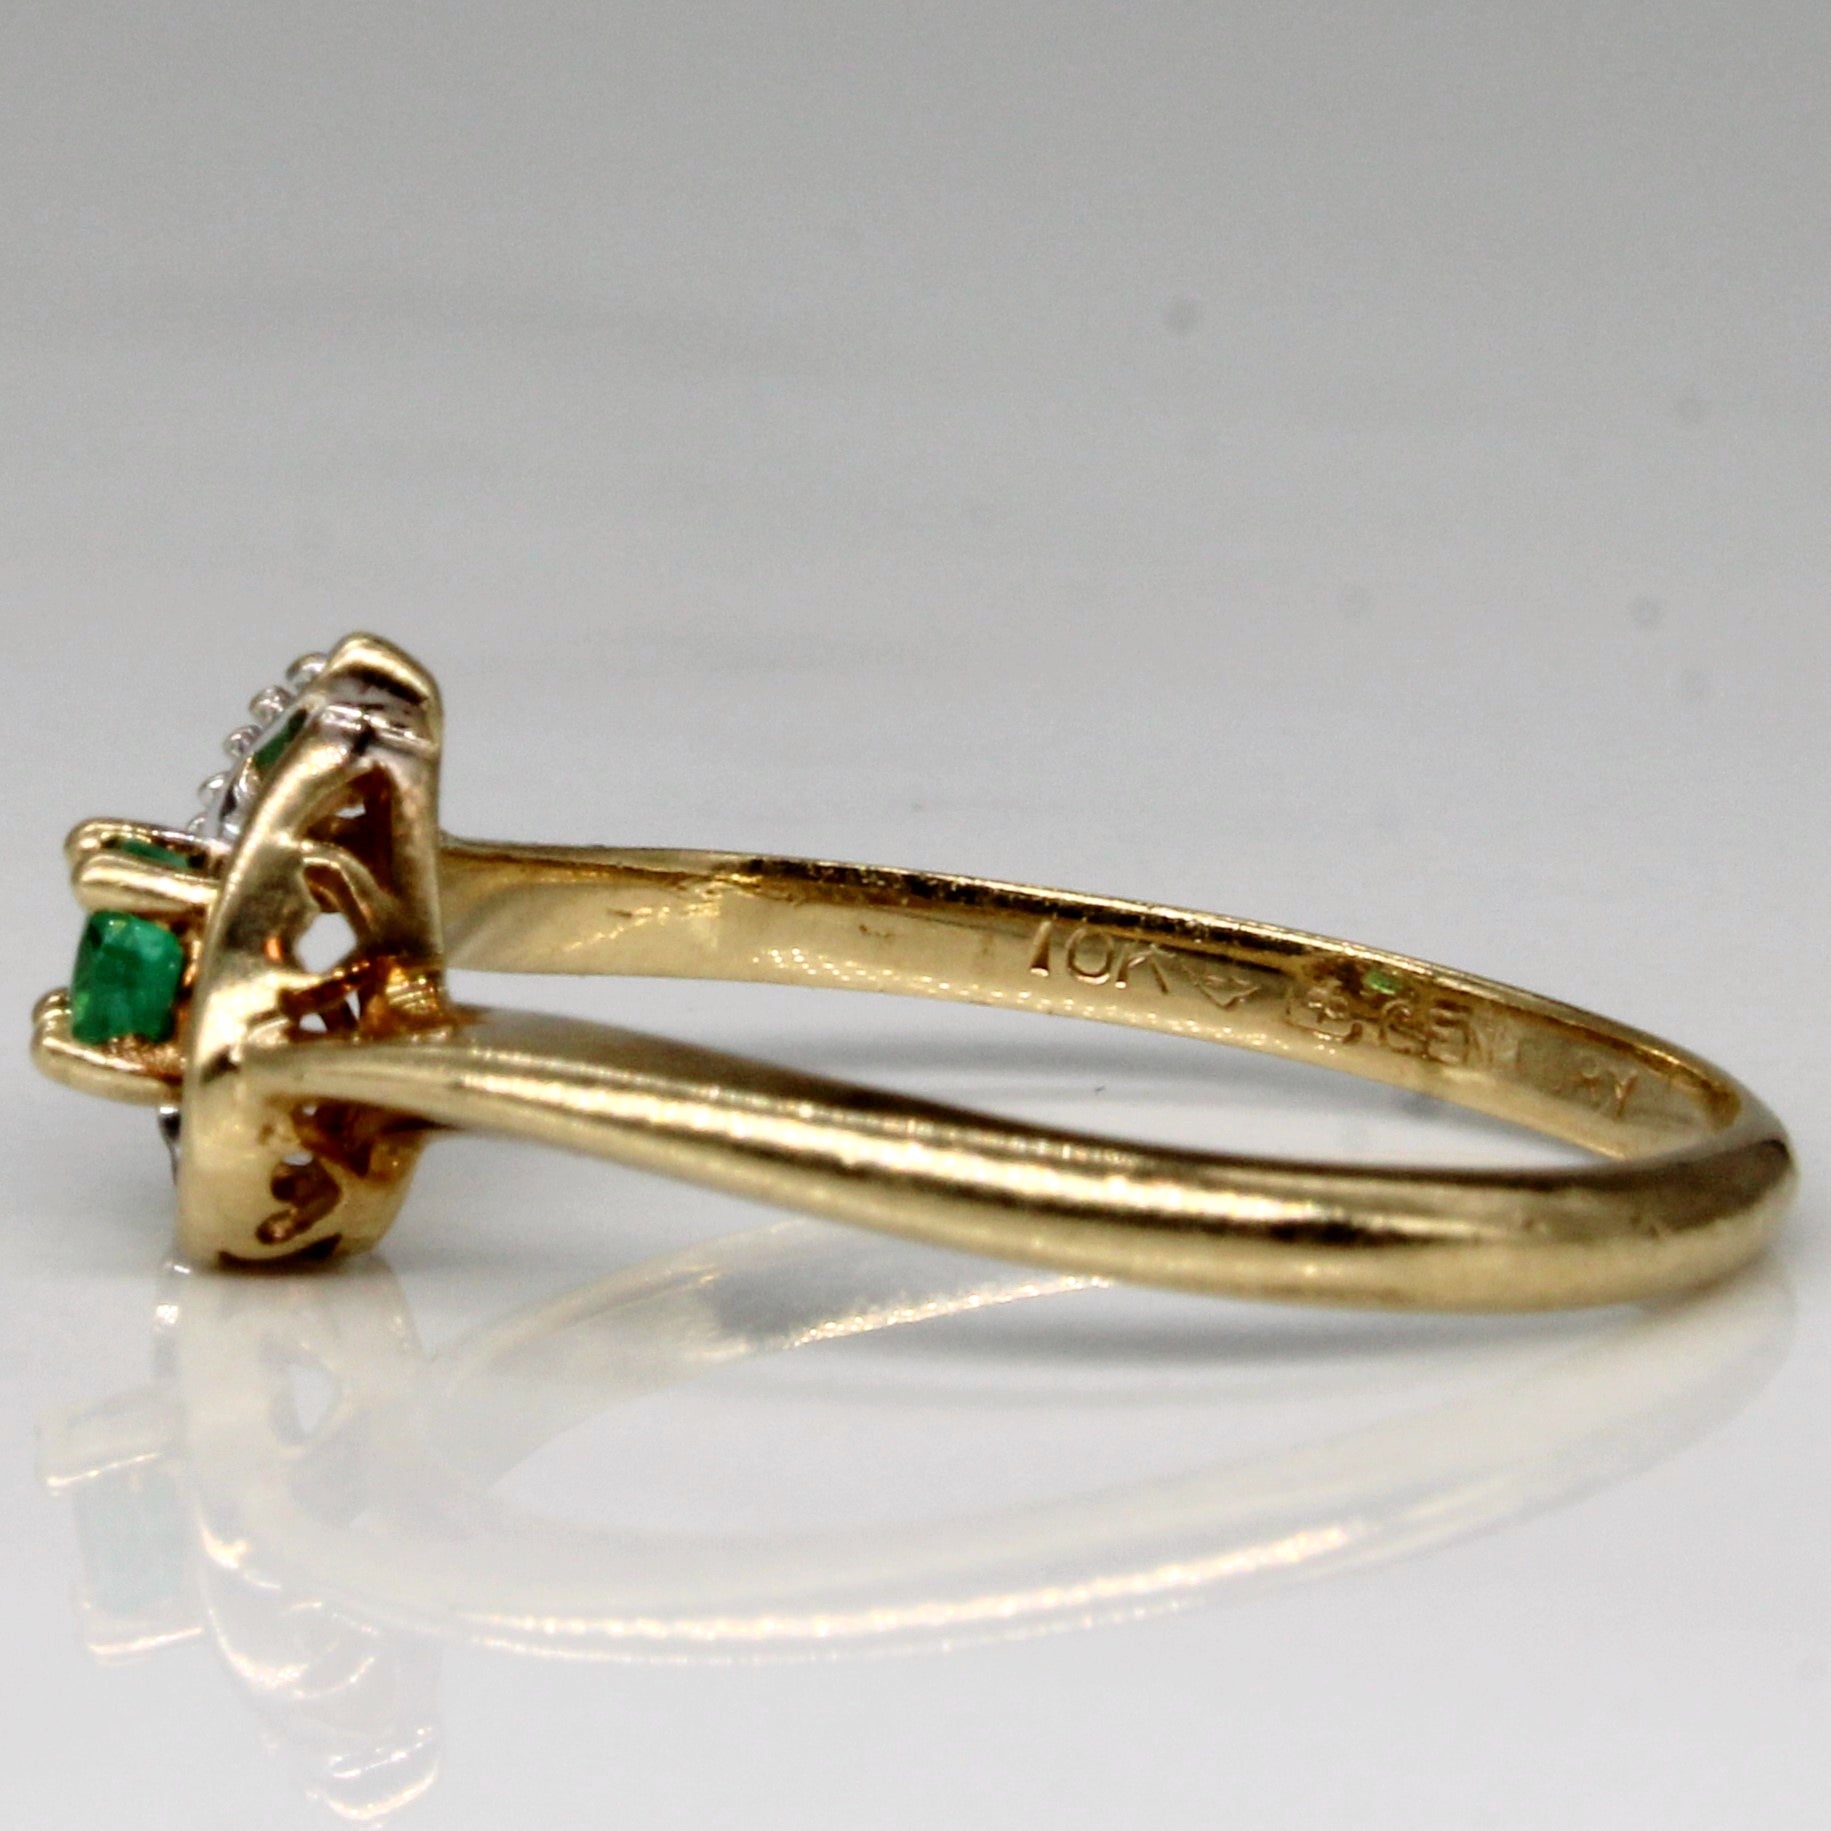 Emerald & Diamond Heart Ring | 0.07ct, 0.01ct | SZ 5.5 |